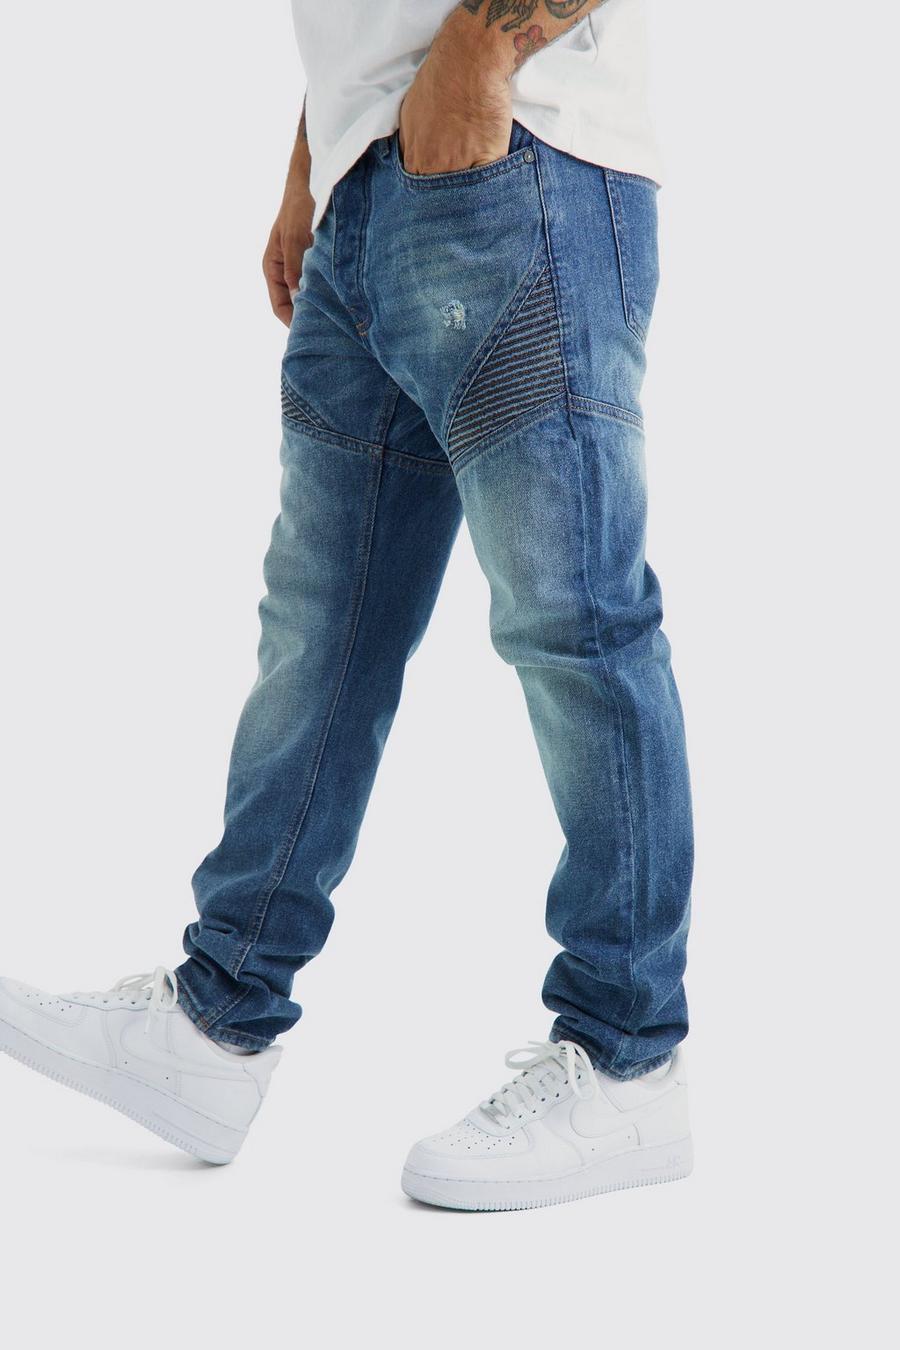 Jeans stile Biker Slim Fit in denim rigido con pannelli, Vintage blue